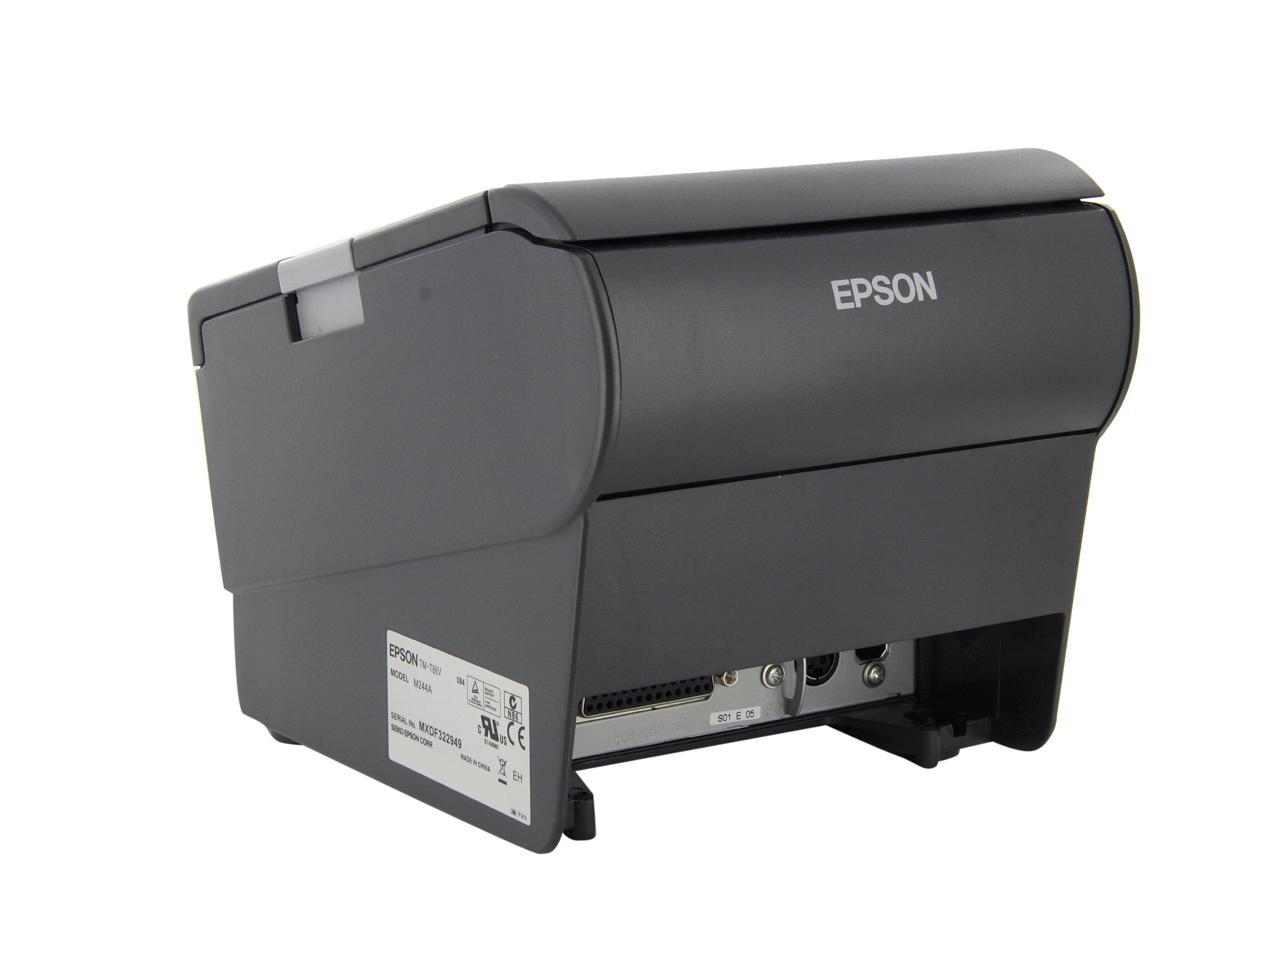 Epson Tm T88v Direct Thermal Printer Monochrome Desktop Receipt Print Neweggca 3300